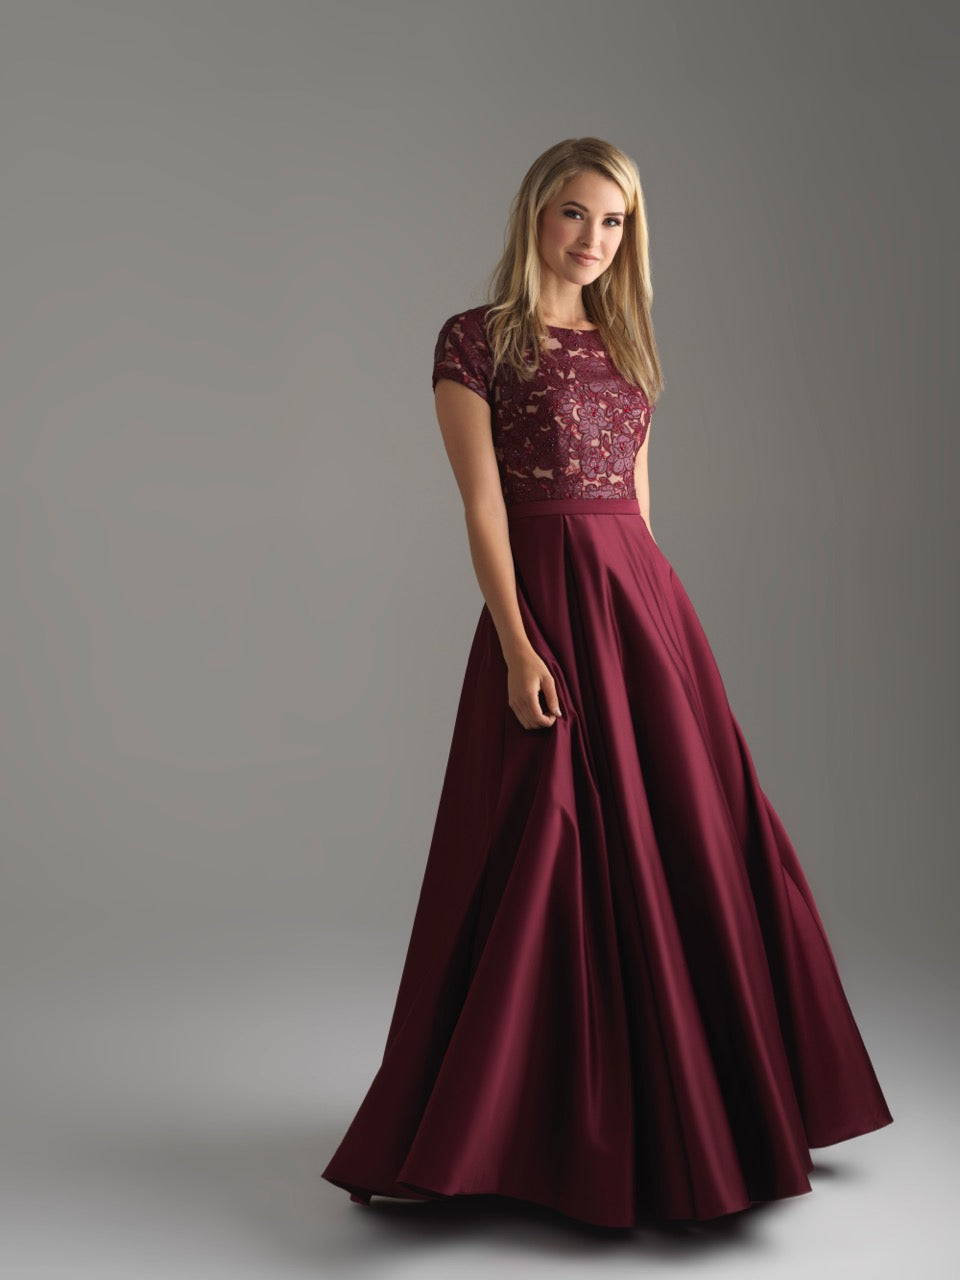 Modest Prom Dresses Shop, 59% OFF | www ...